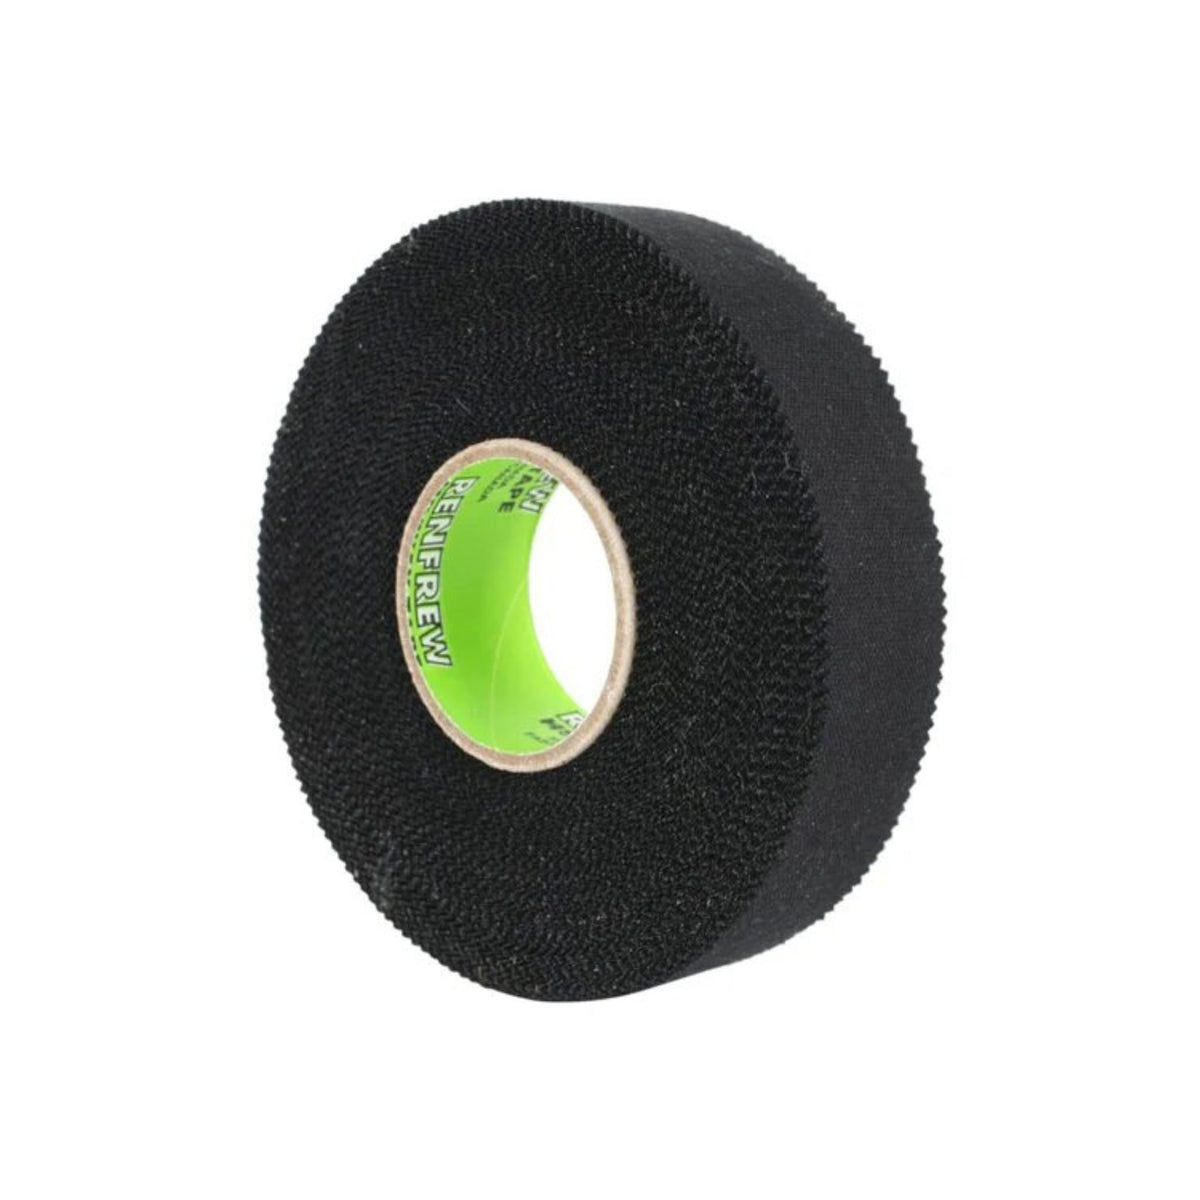 Skate Tape 24mm Wide x 25M Long - Renfrew Pro -Roller Skates Parts and Accessories | JT Skate